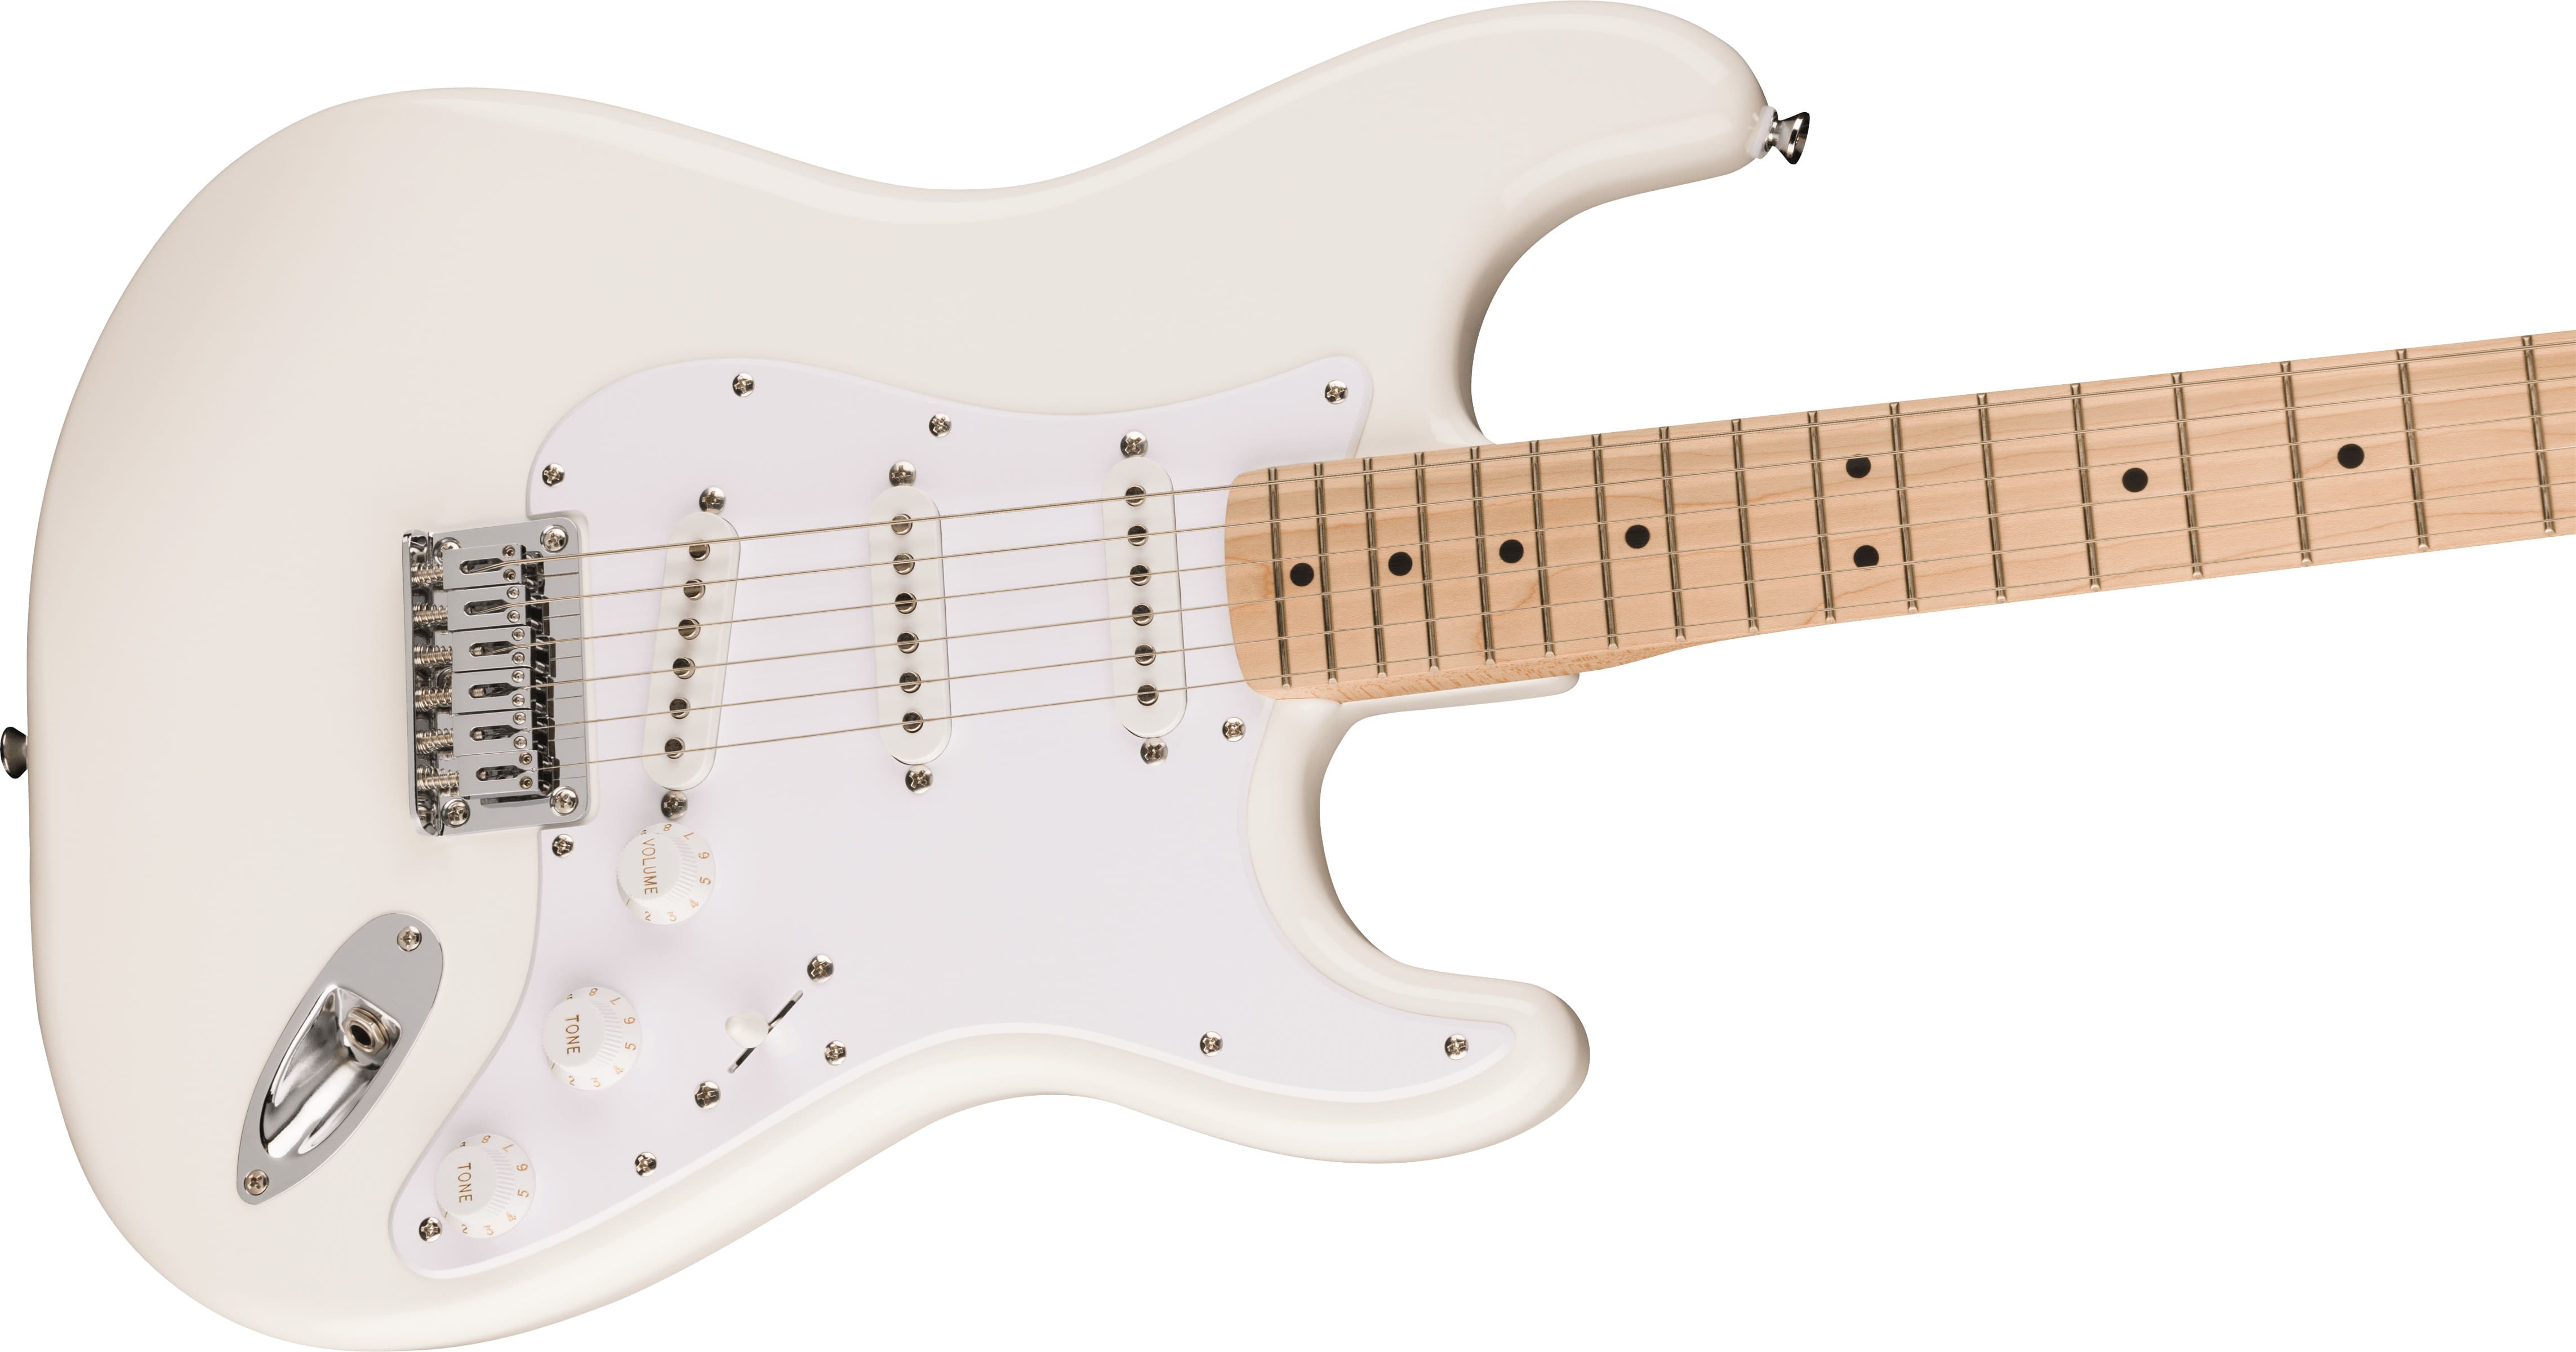 White stratocaster. Электрогитара Fender Stratocaster. Гитара Фендер стратокастер. Fender Stratocaster Olympic White. Электрогитара Fender American.